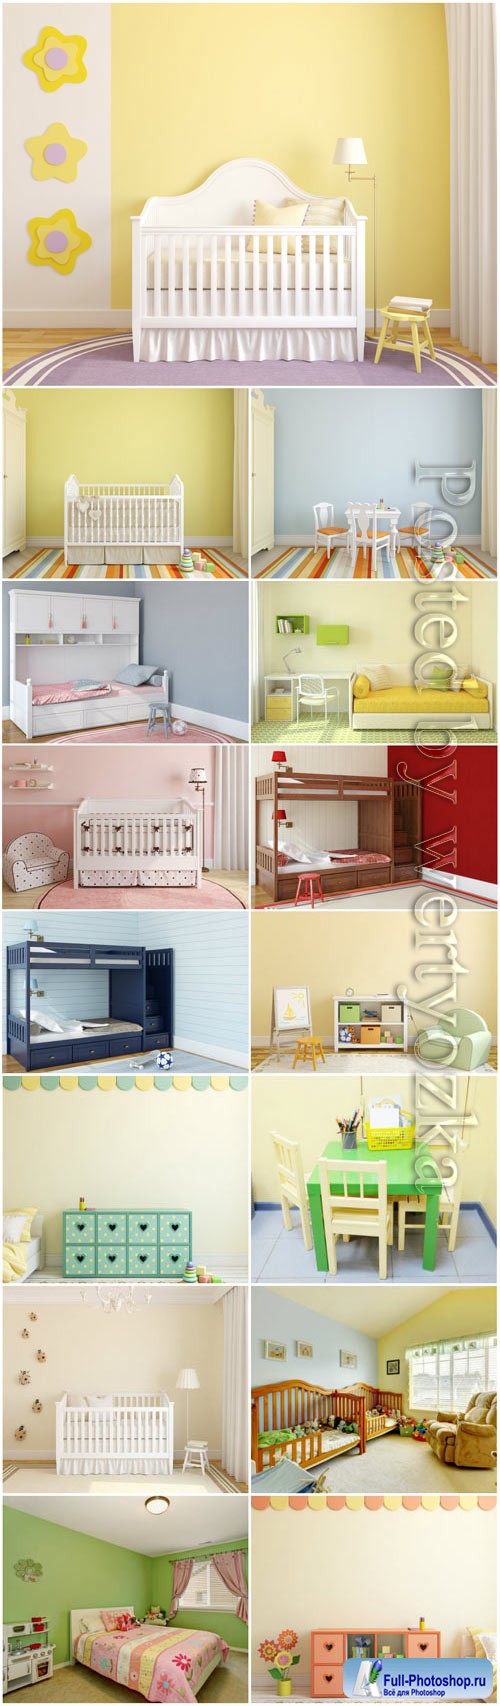 Children's rooms, interior stock photo